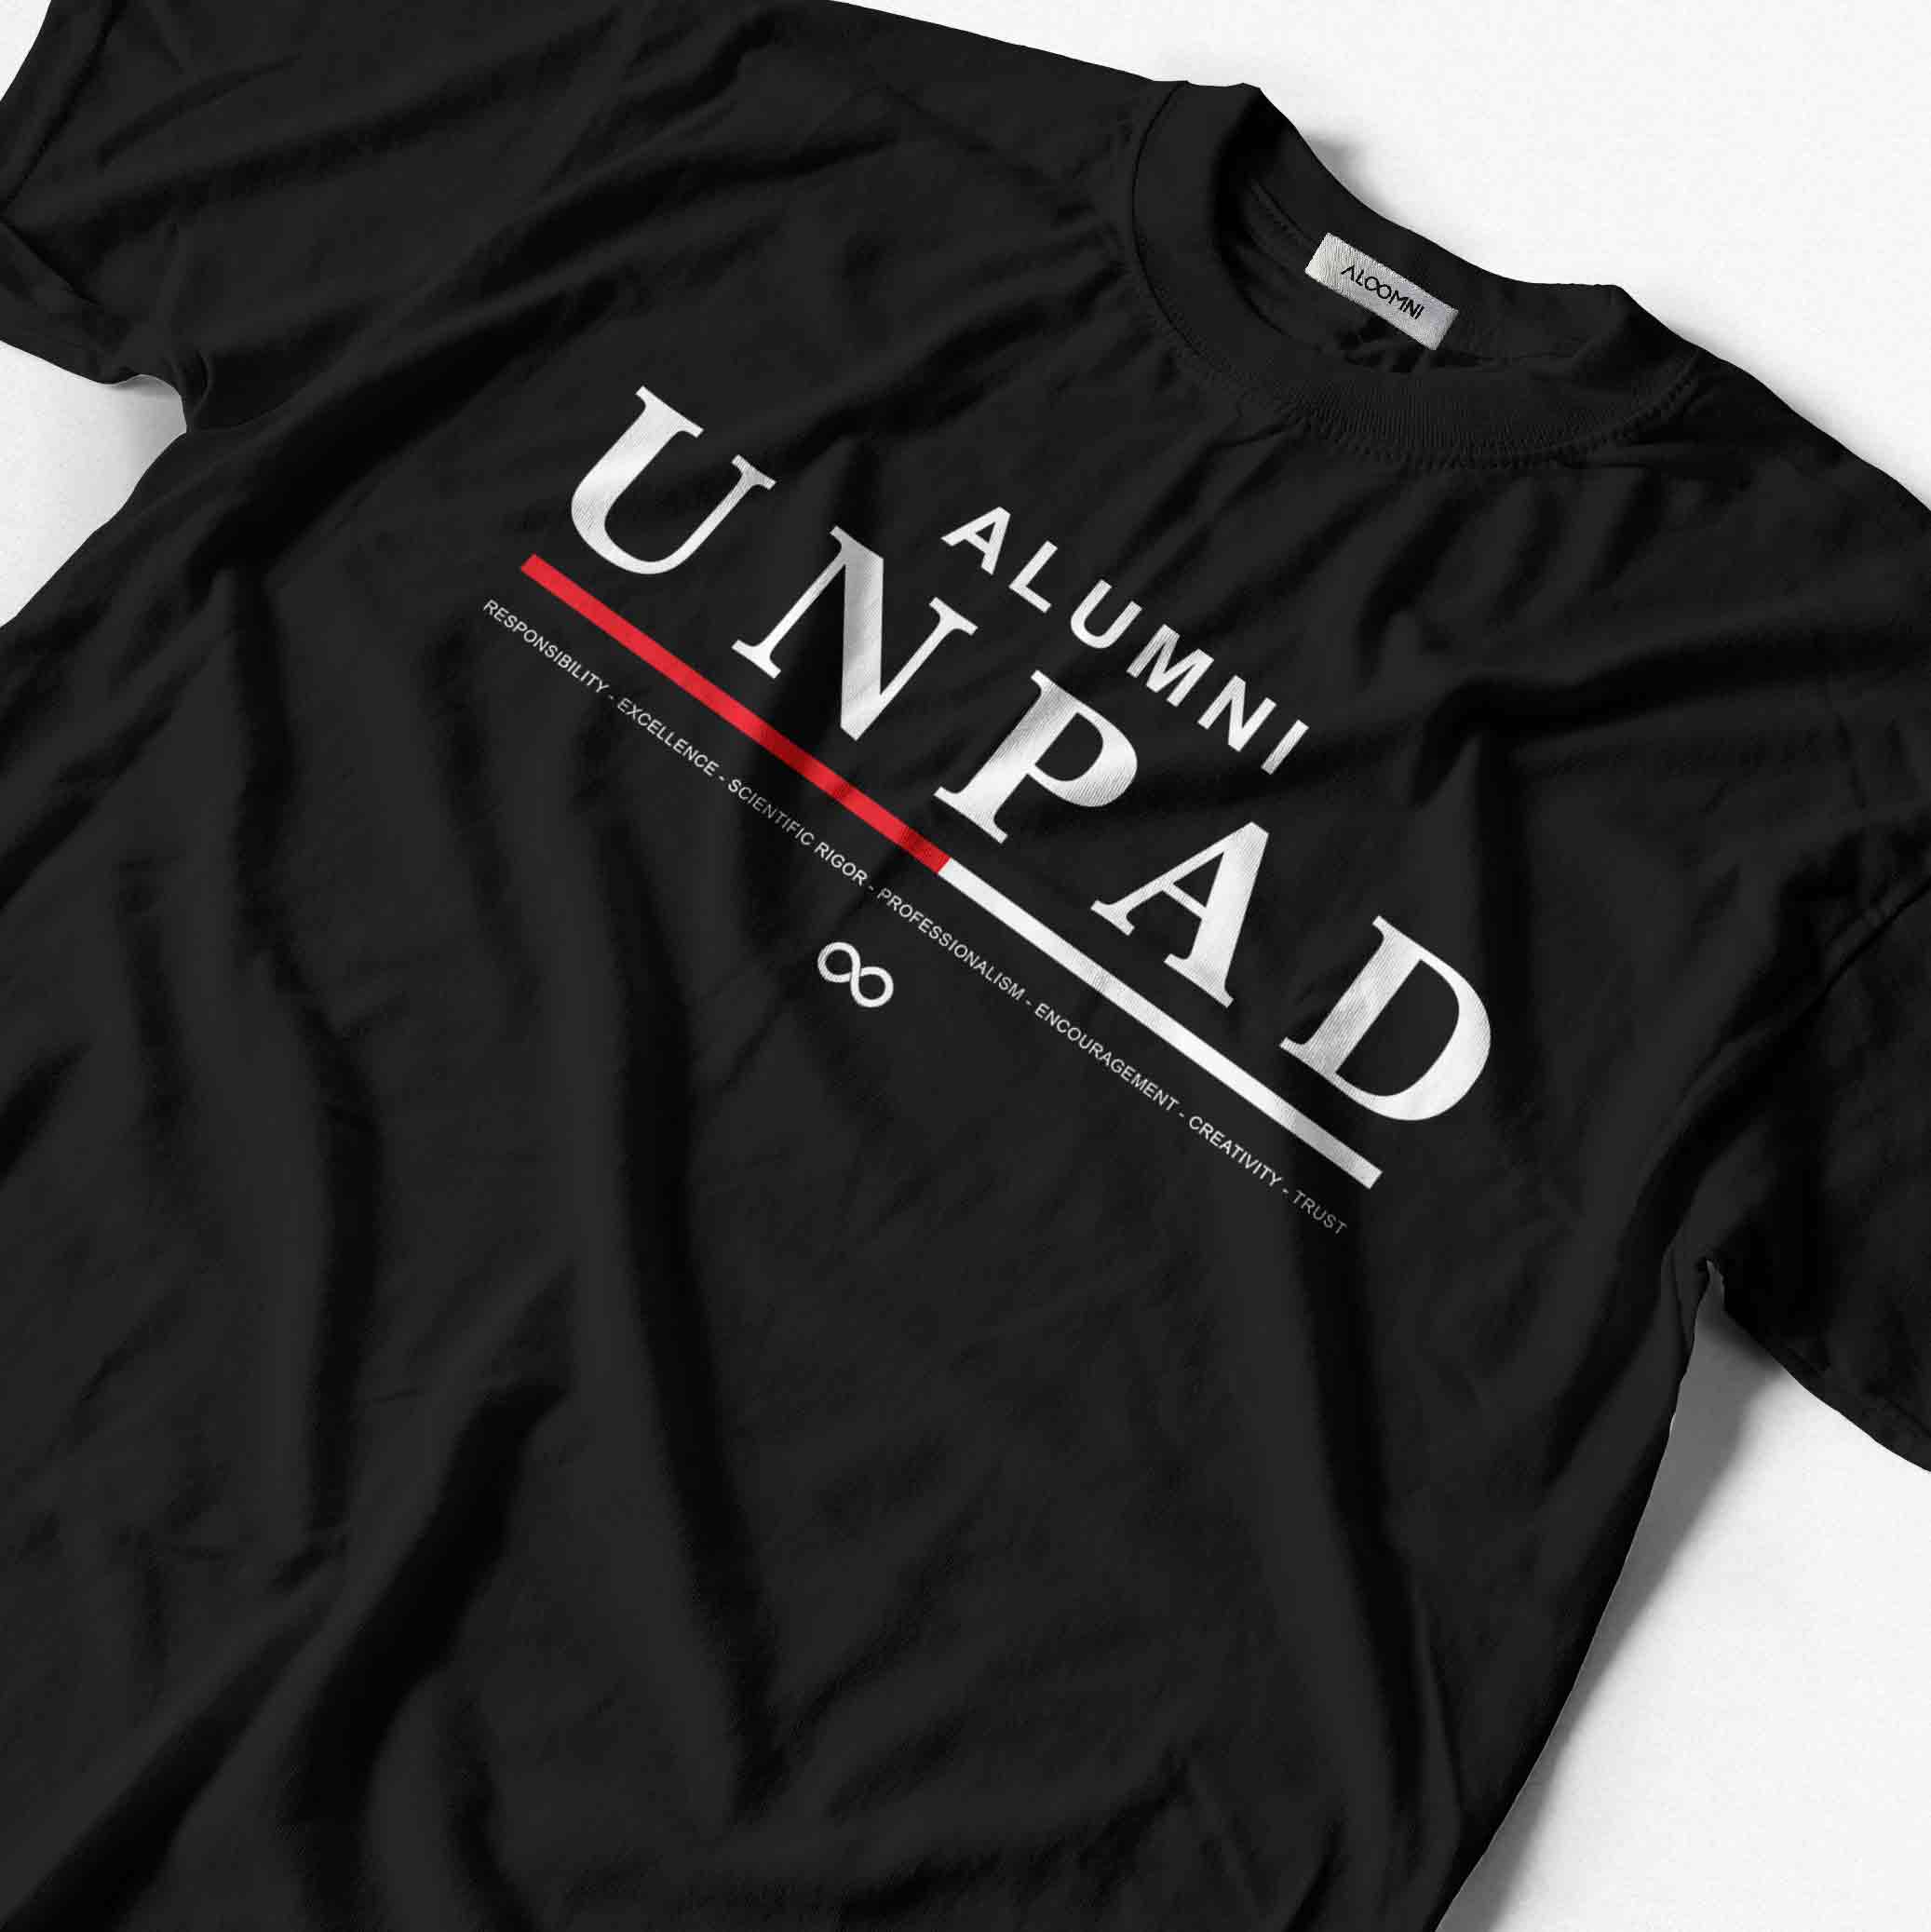  UNPAD  Legacy Aloomni